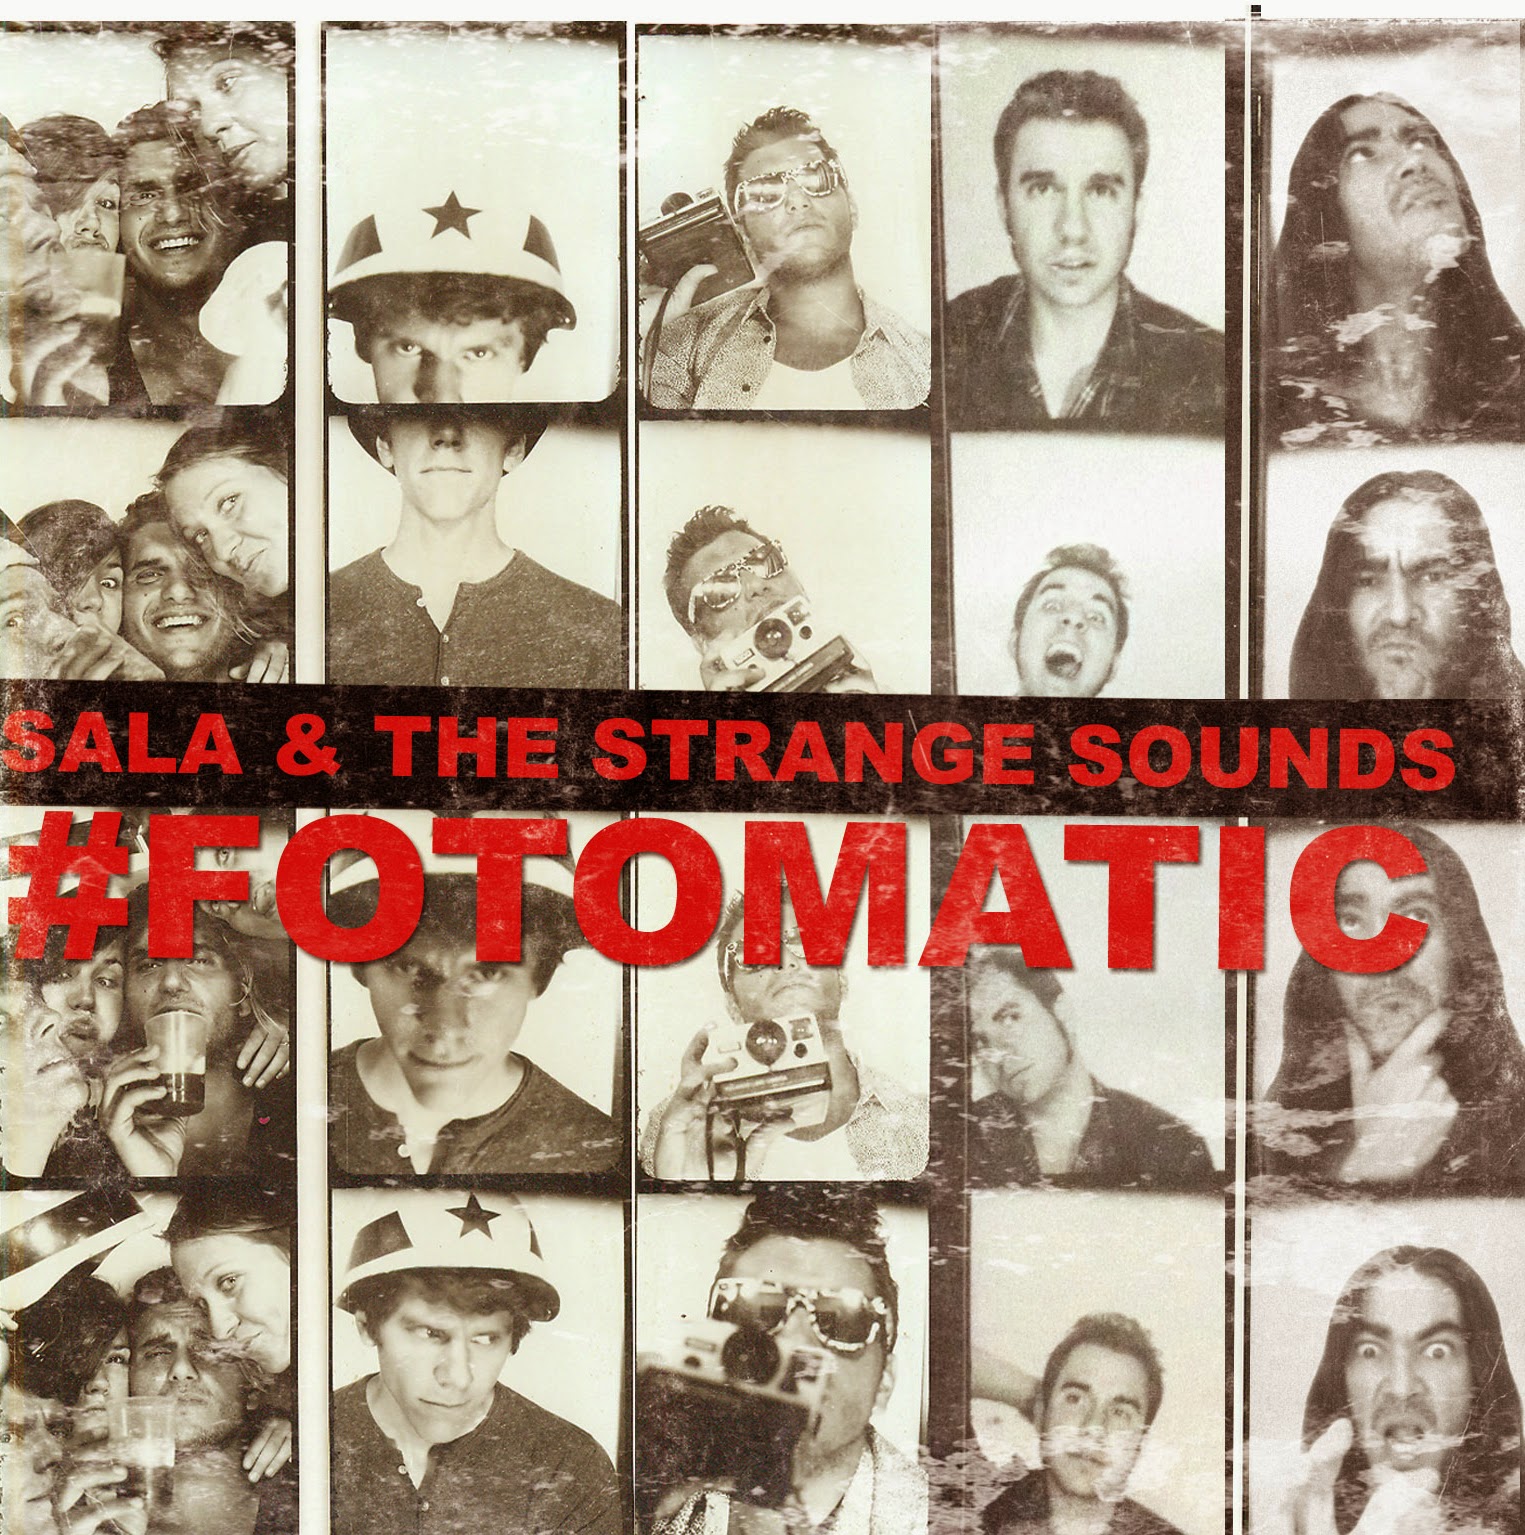 #Fotomatic, nuevo trabajo de Sala & The Strange Sounds.